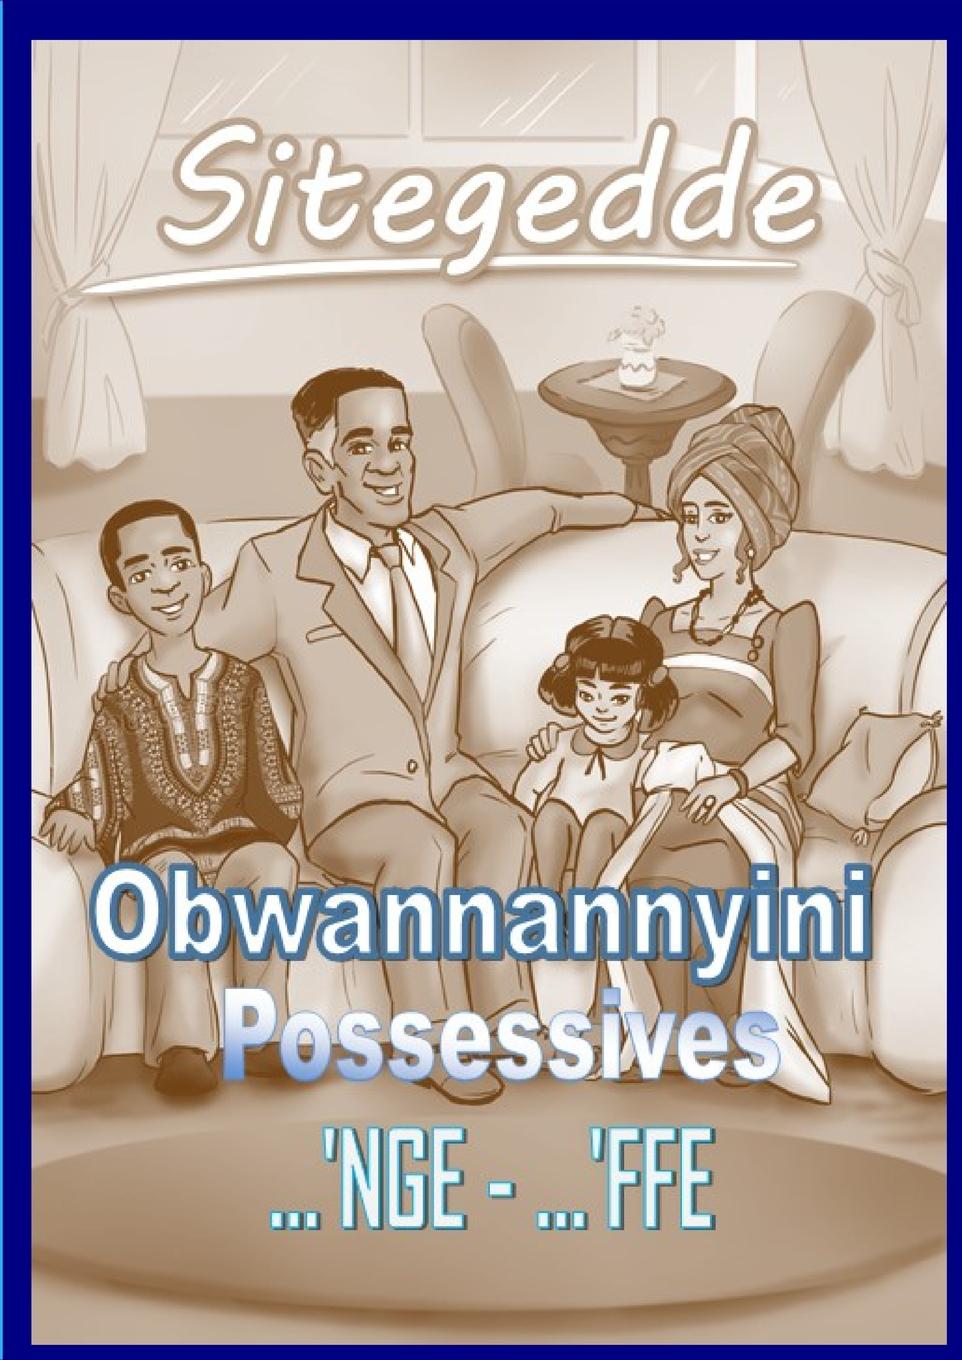 Kniha Sitegedde - Luganda Possesives and Pronouns, 